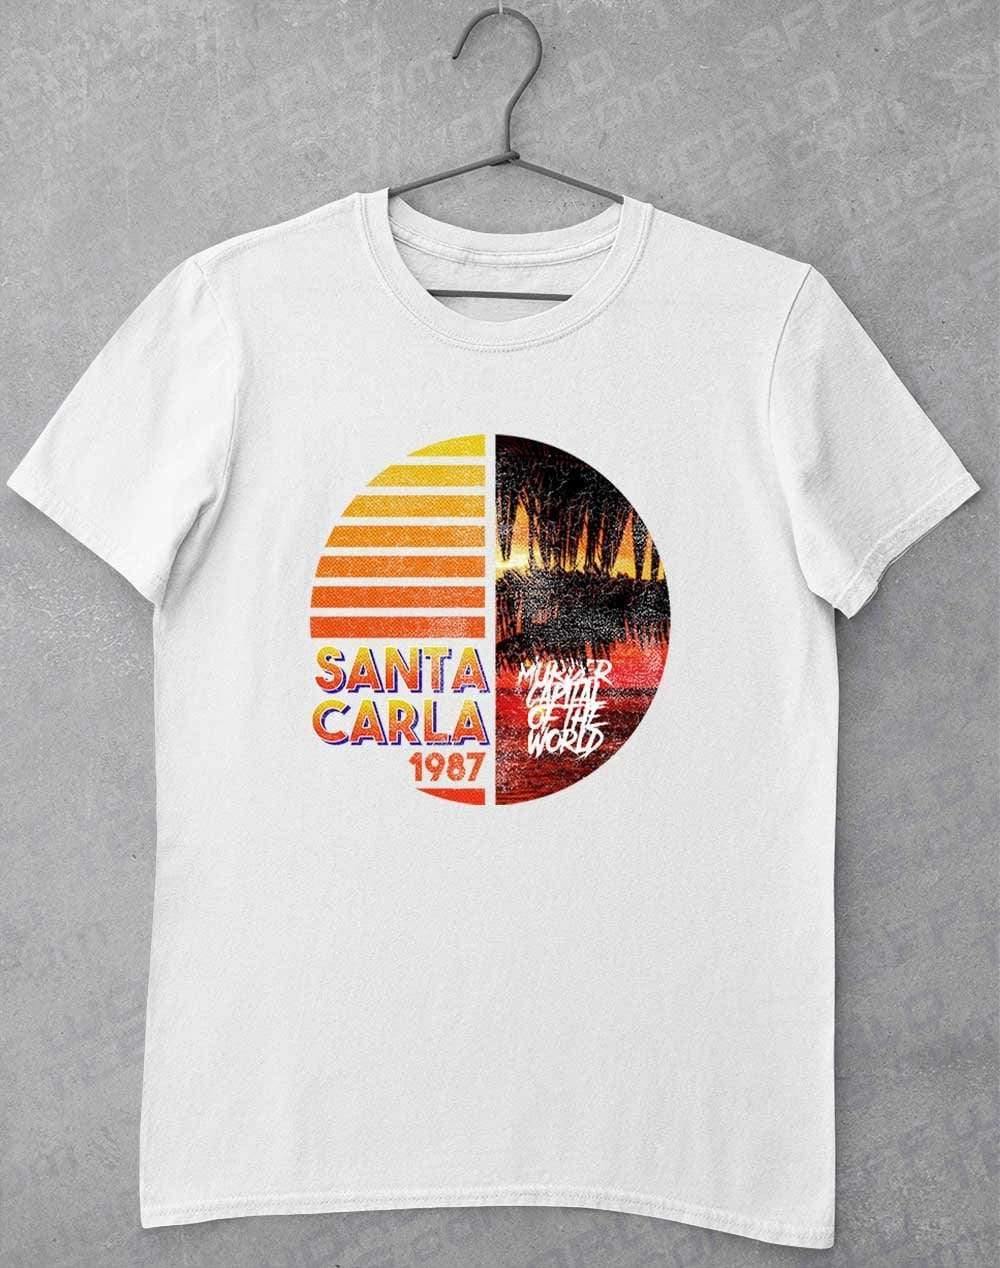 Santa Carla 1987 - T-Shirt S / White  - Off World Tees